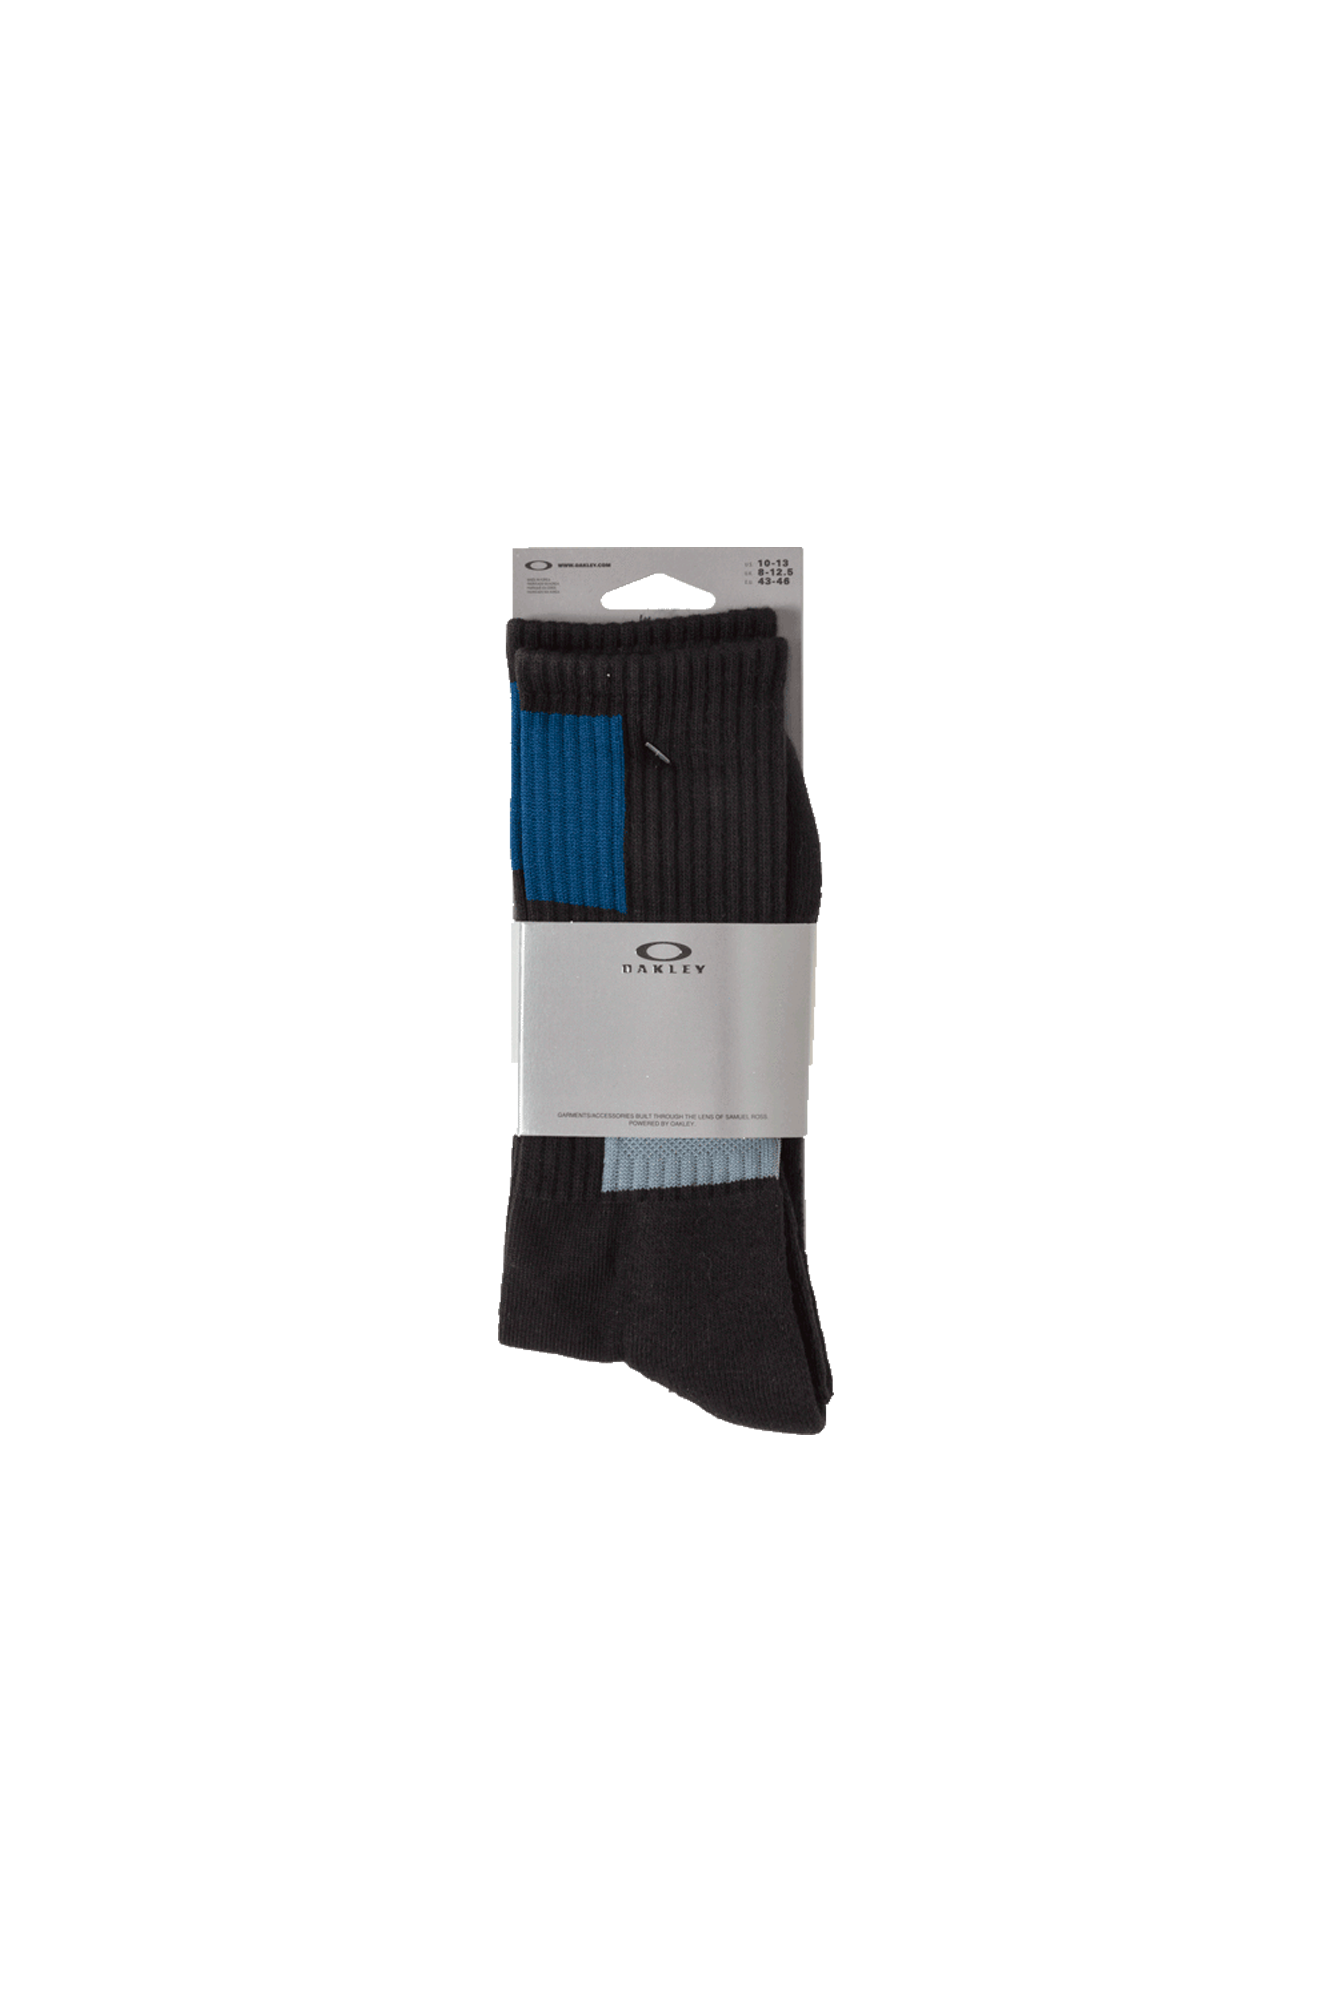 Oakley by Samuel Ross Socks Socks Metal Detail Black 93300-02E#000#C0010#S/M - One Block Down